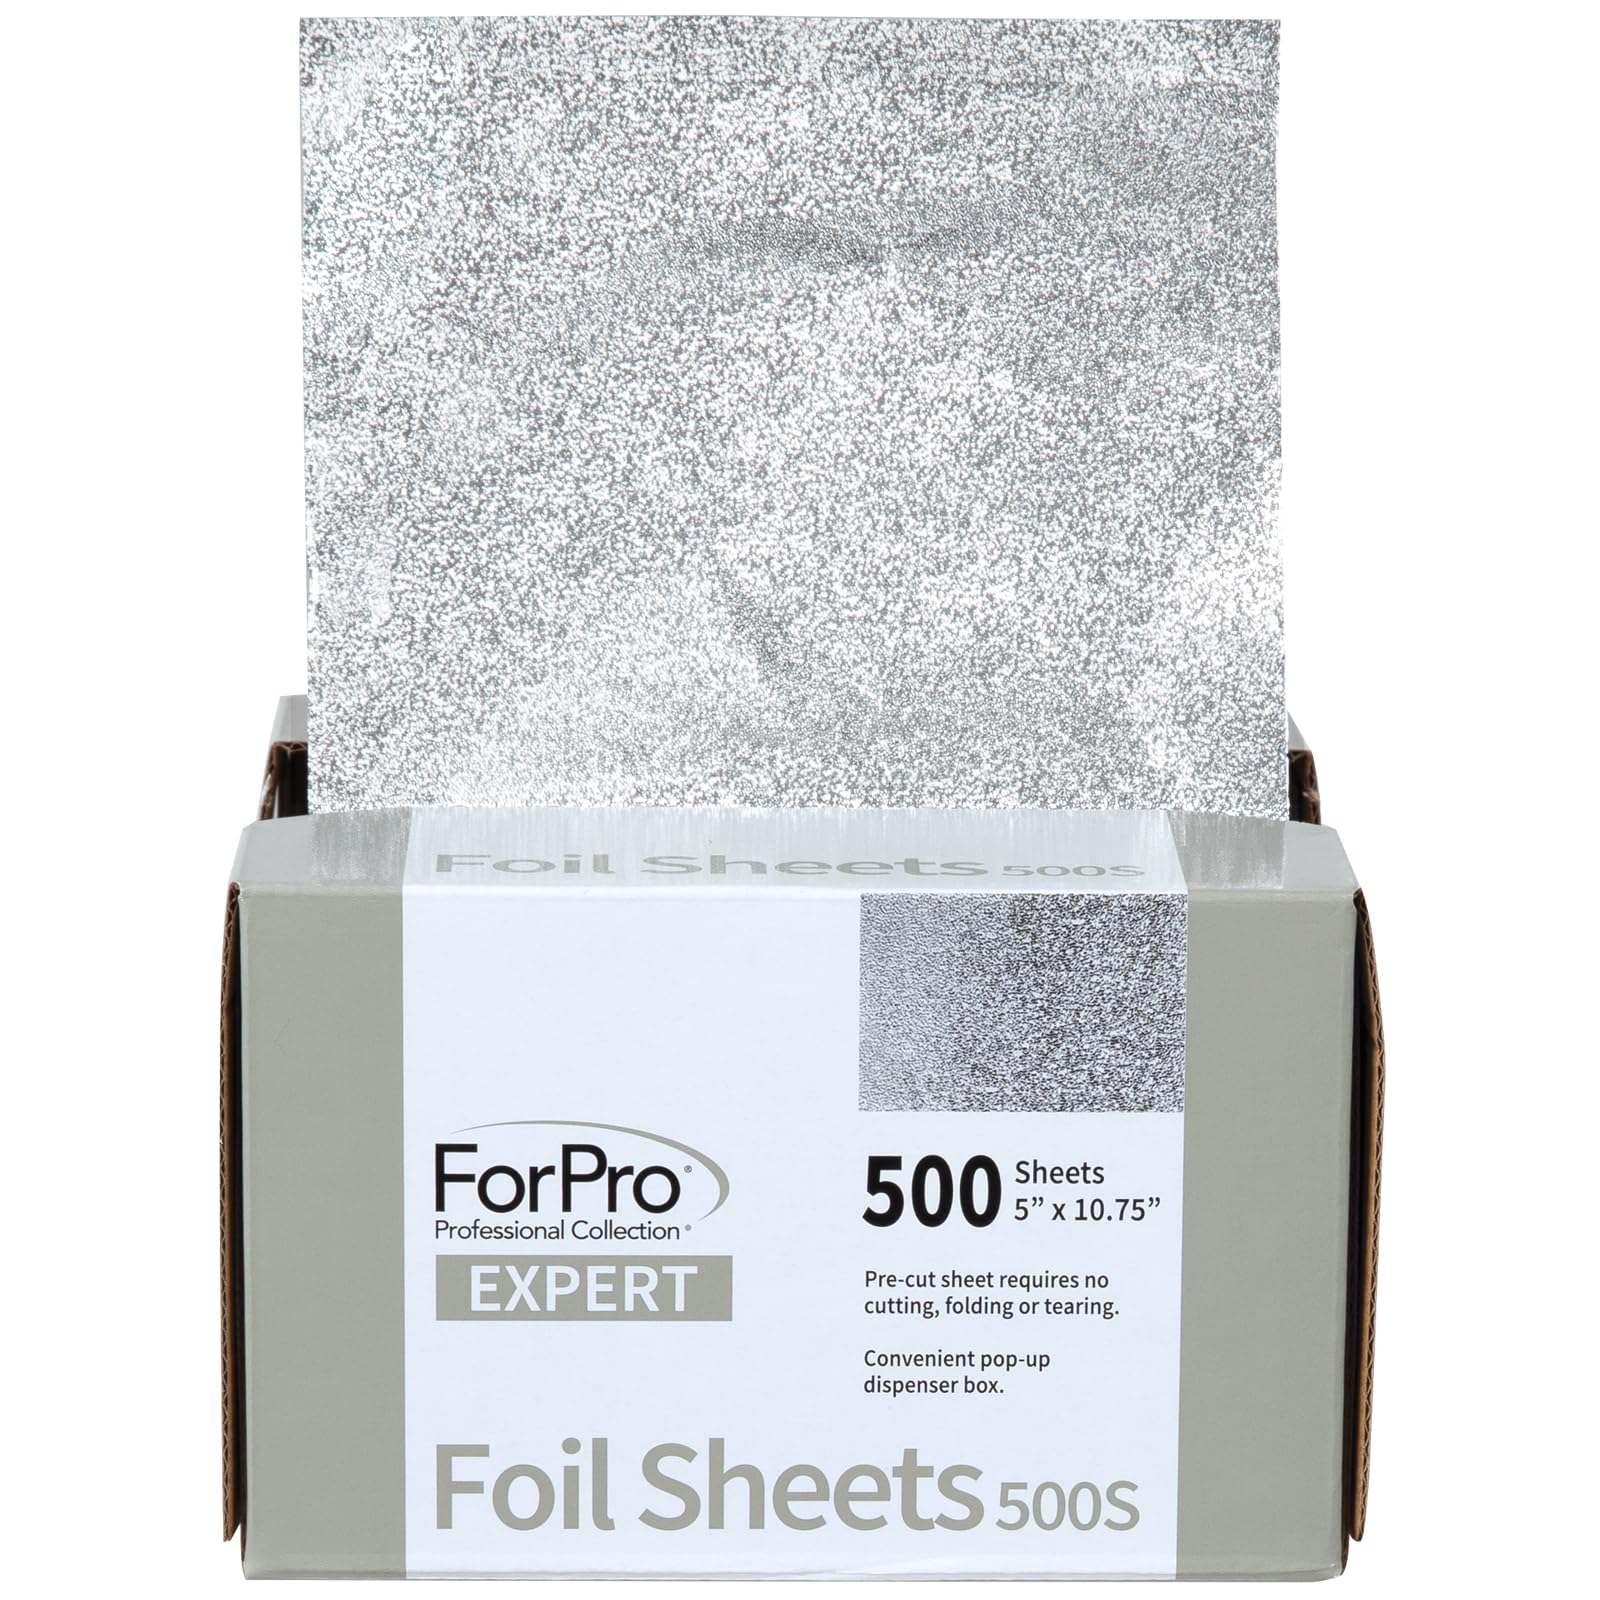 ForPro Professional Collection ForPro Expert Embossed Foil Sheets 500S, Aluminum Foil, Pop-Up Foil Dispenser, Hair Foils for Color Application and Highlighting